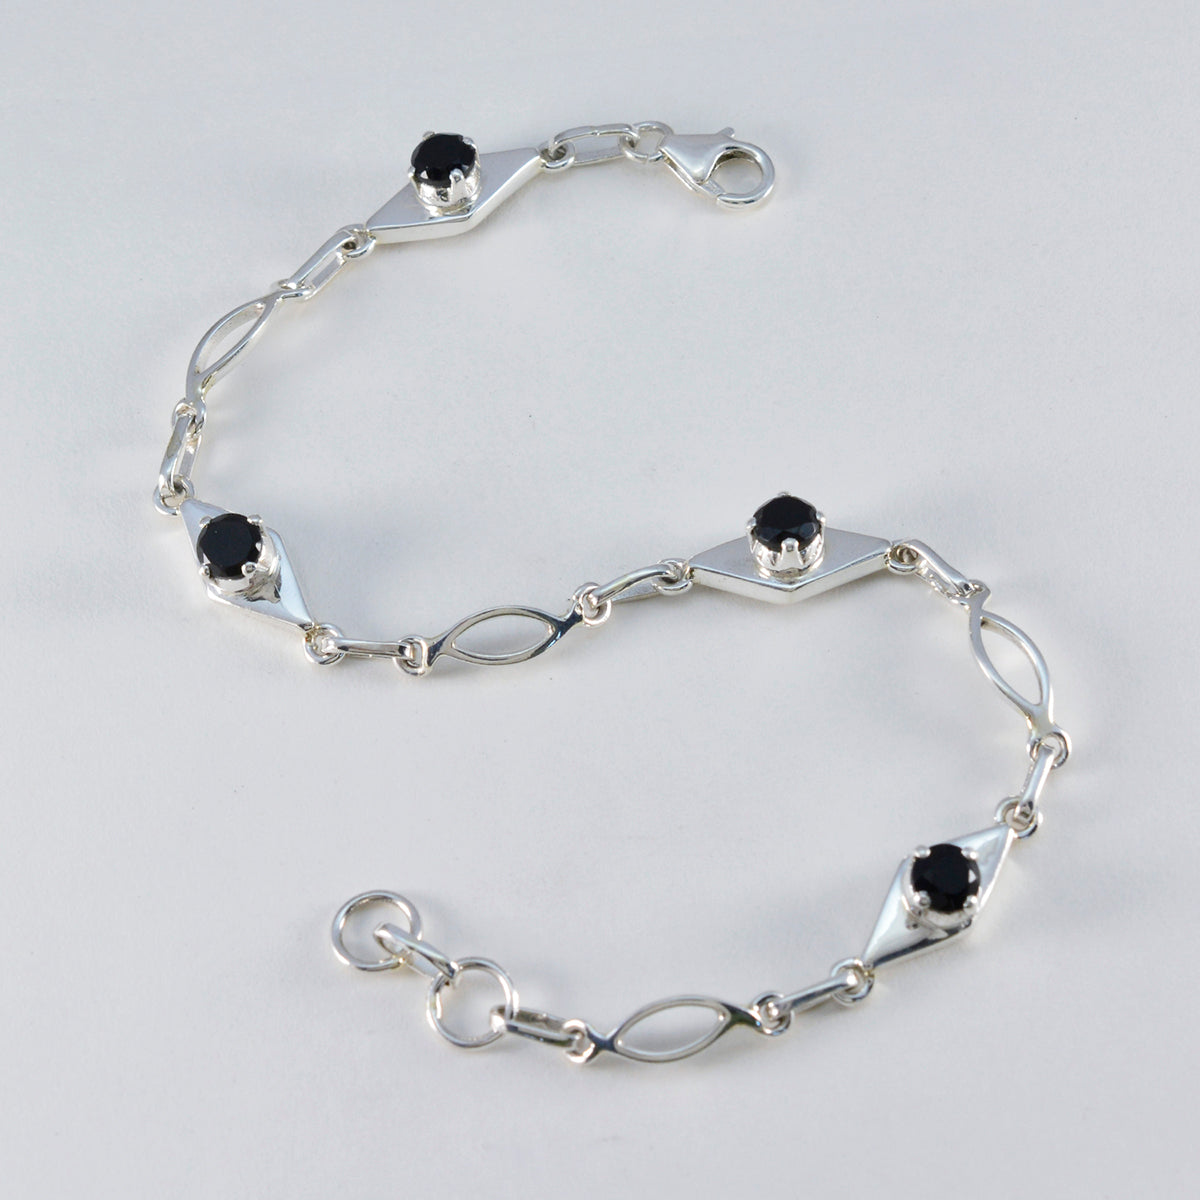 Riyo Antique 925 Sterling Silver Bracelet For Women Black Onyx Bracelet Prong Setting Bracelet with Fish Hook Link Bracelet L Size 6-8.5 Inch.